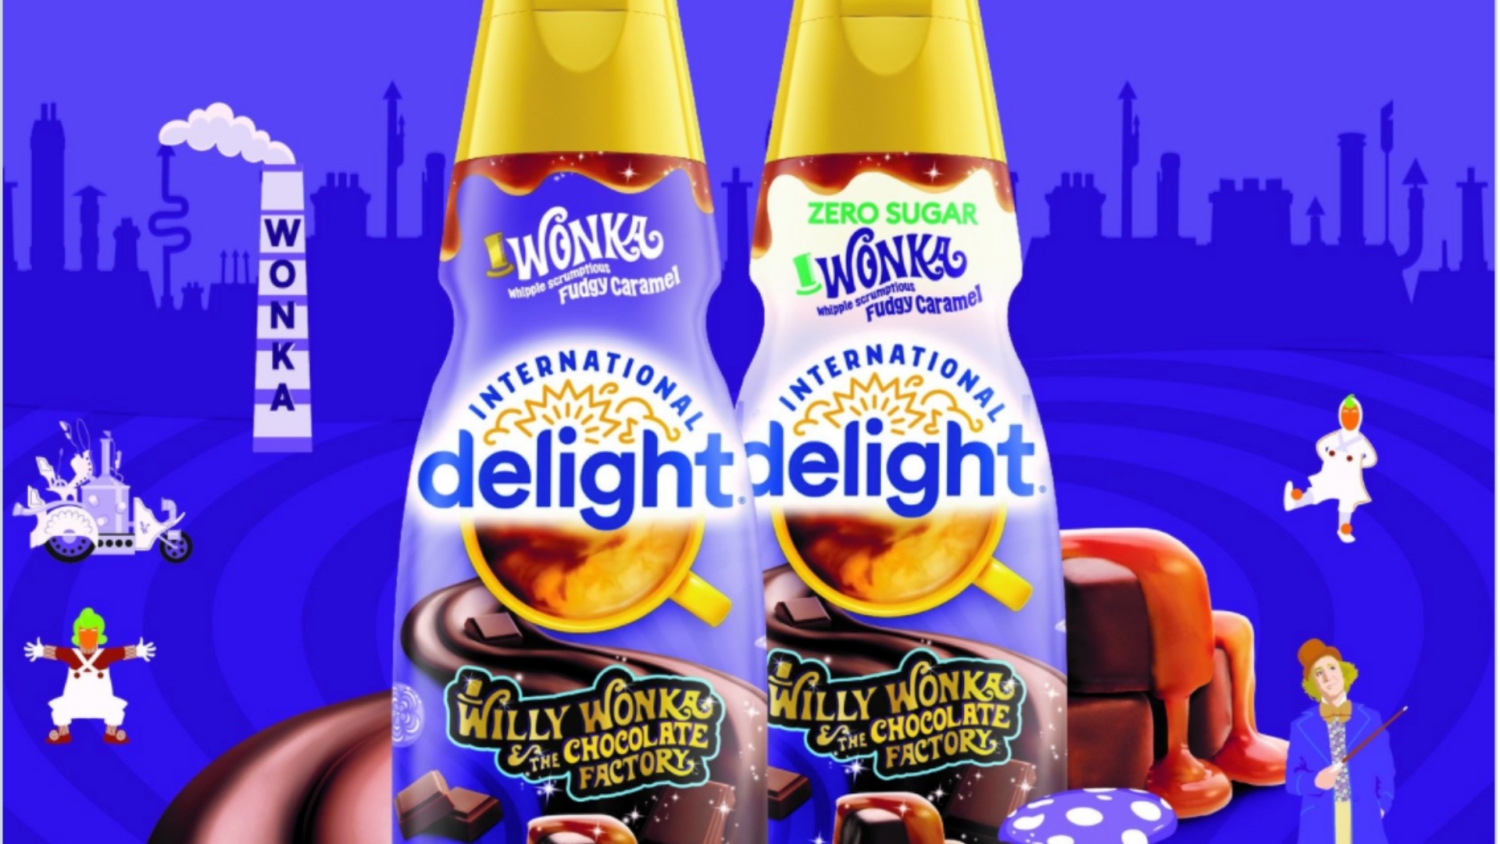 International Delight's Willy Wonka coffee creamer